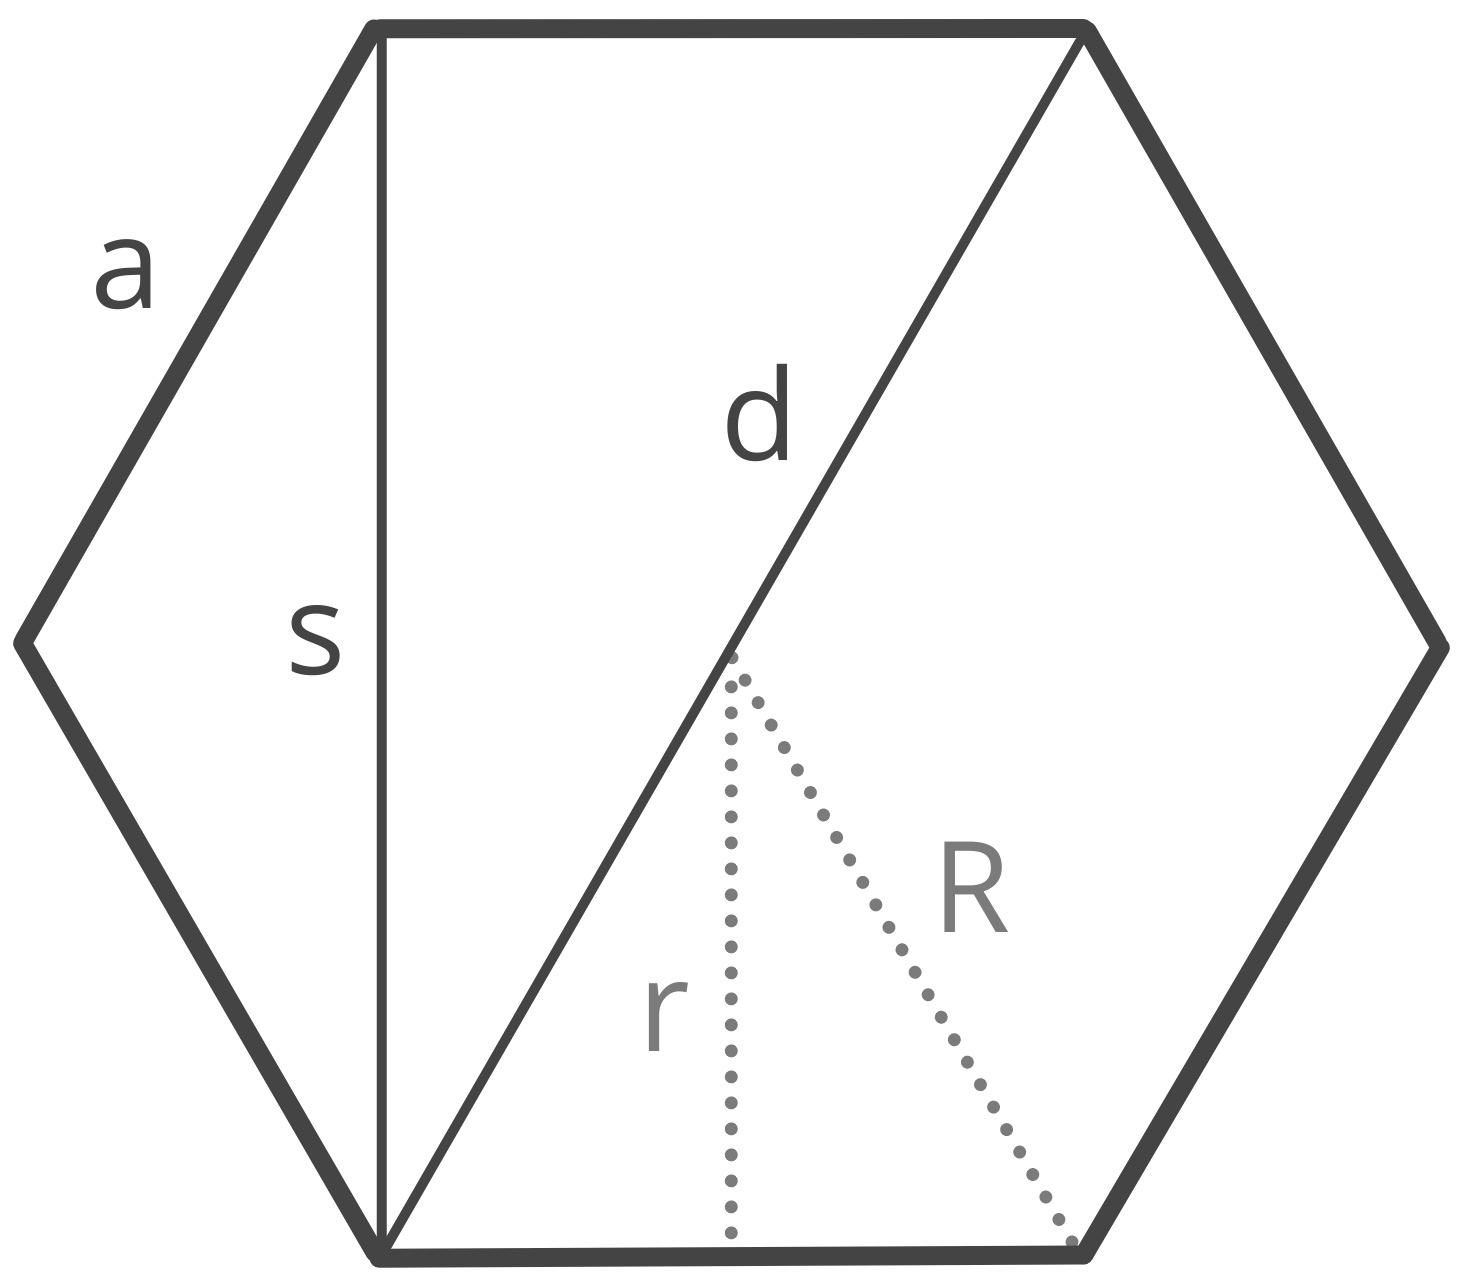 diagram of a hexagon showing the sides, diagonals, circumradius, and apothem